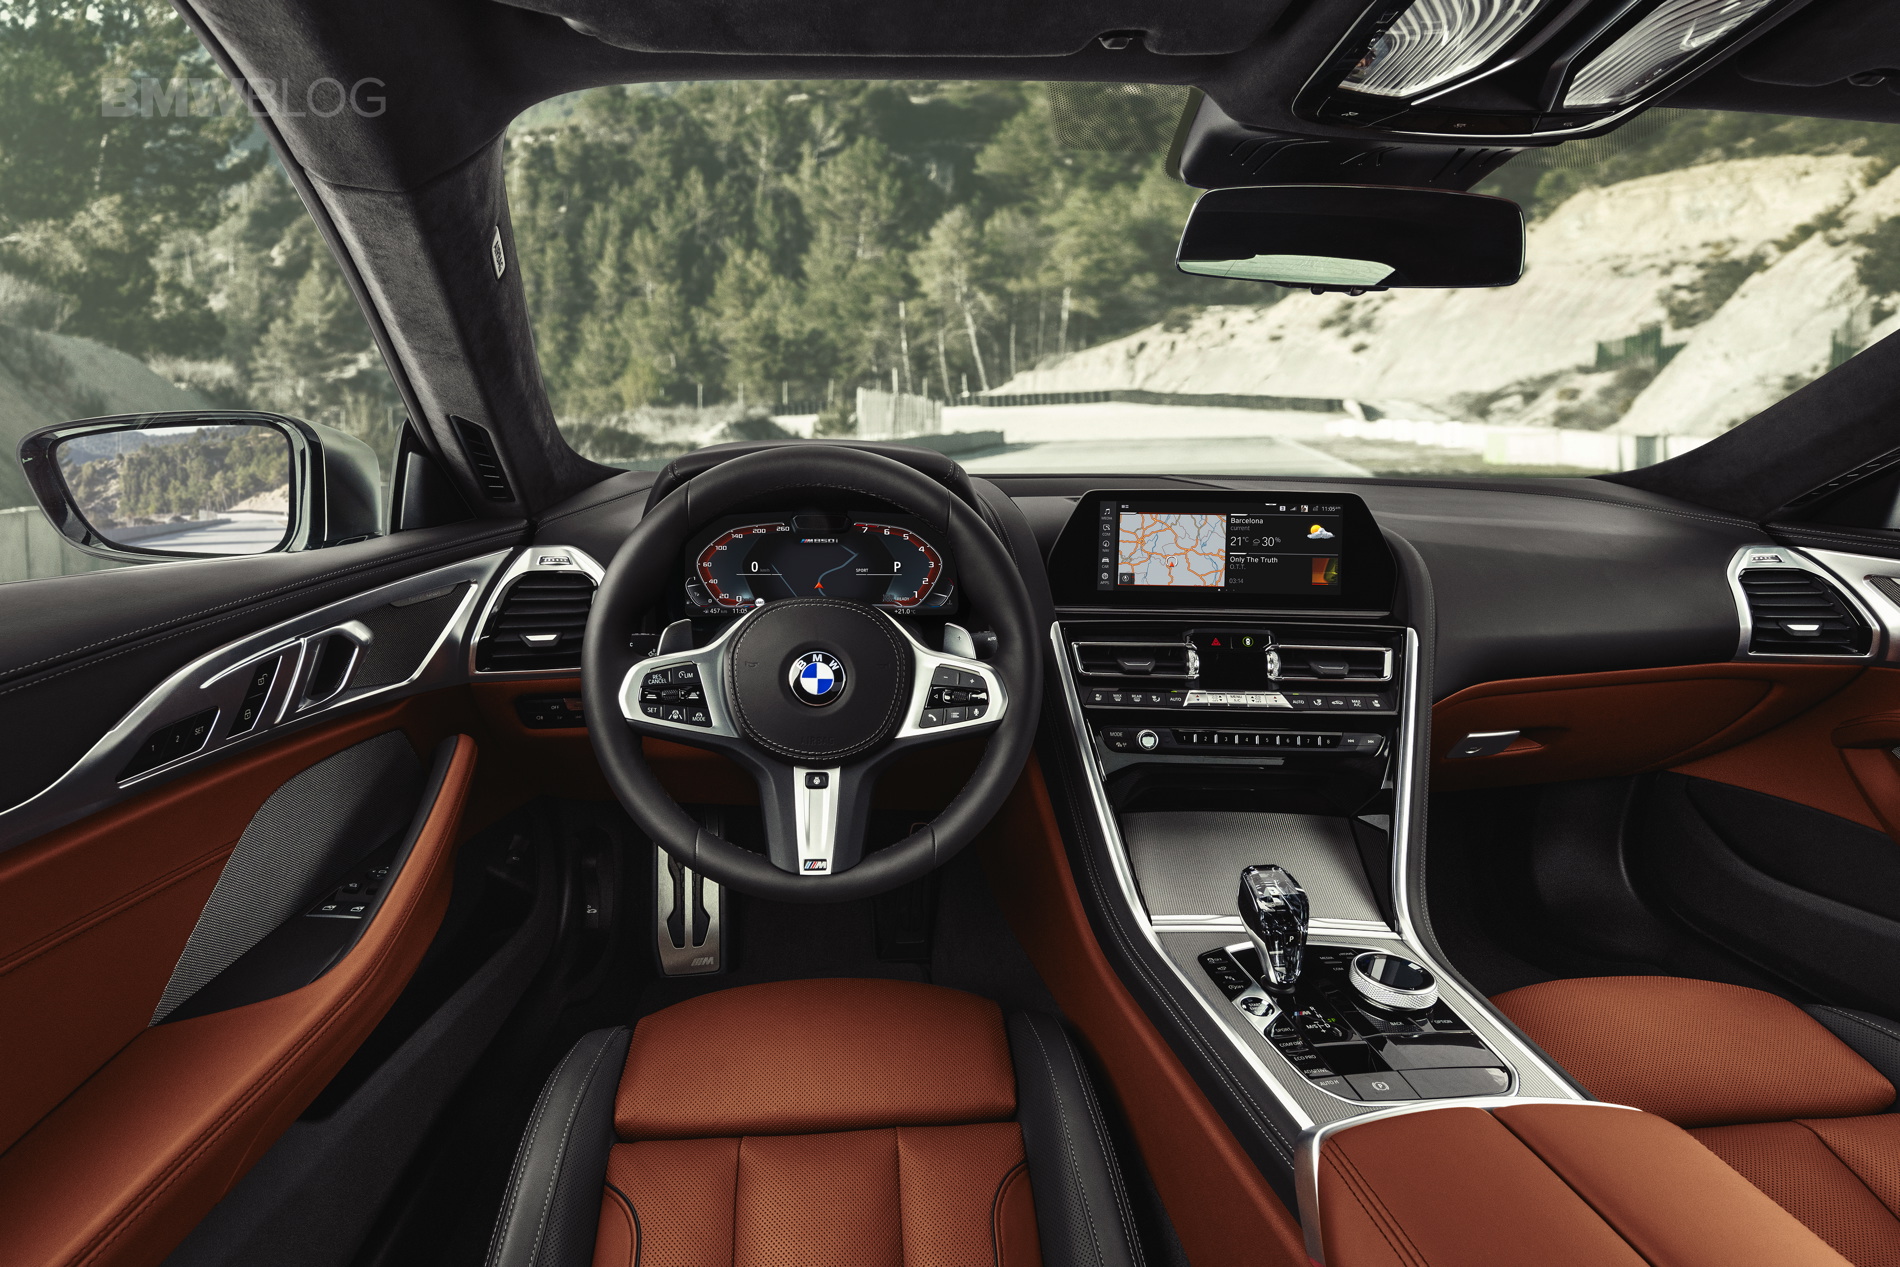 2019 BMW 8 Series Coupe interior 02